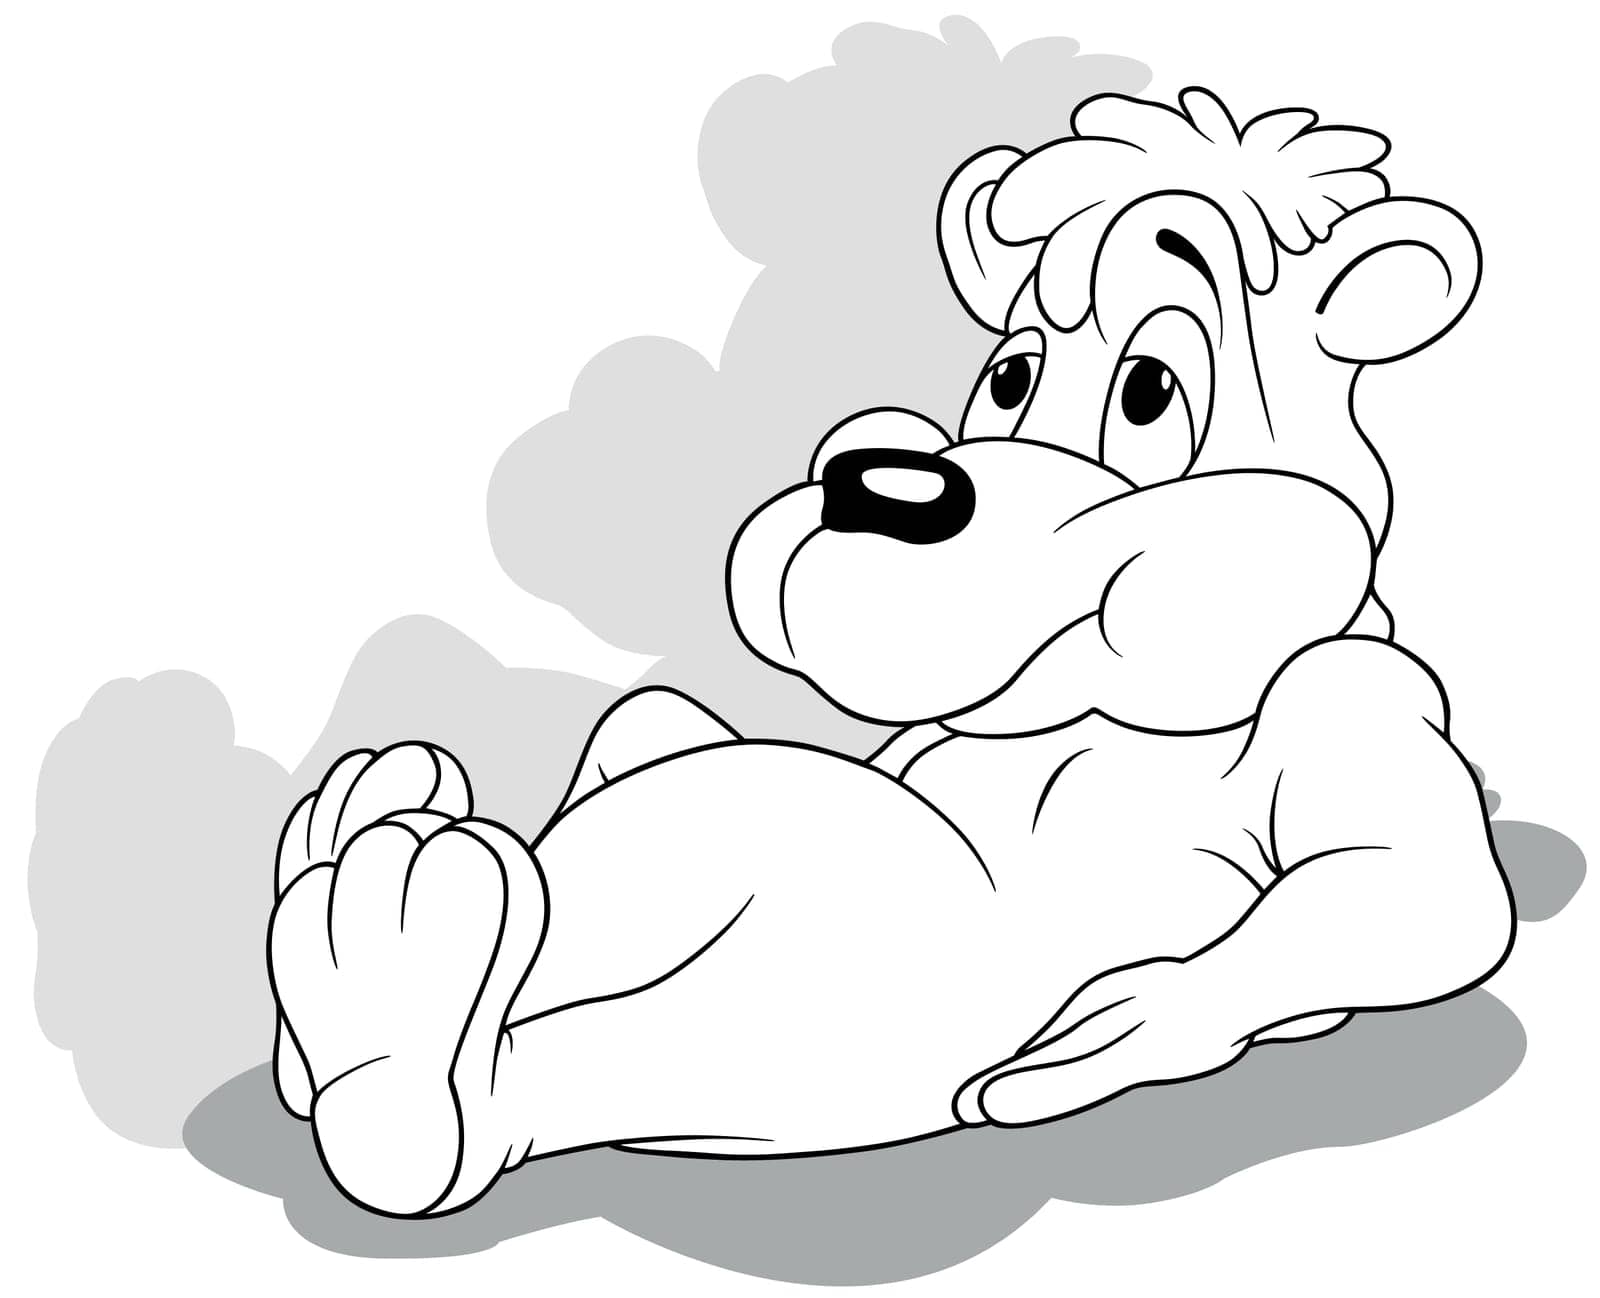 Drawing of a Resting Teddy Bear by illustratorCZ